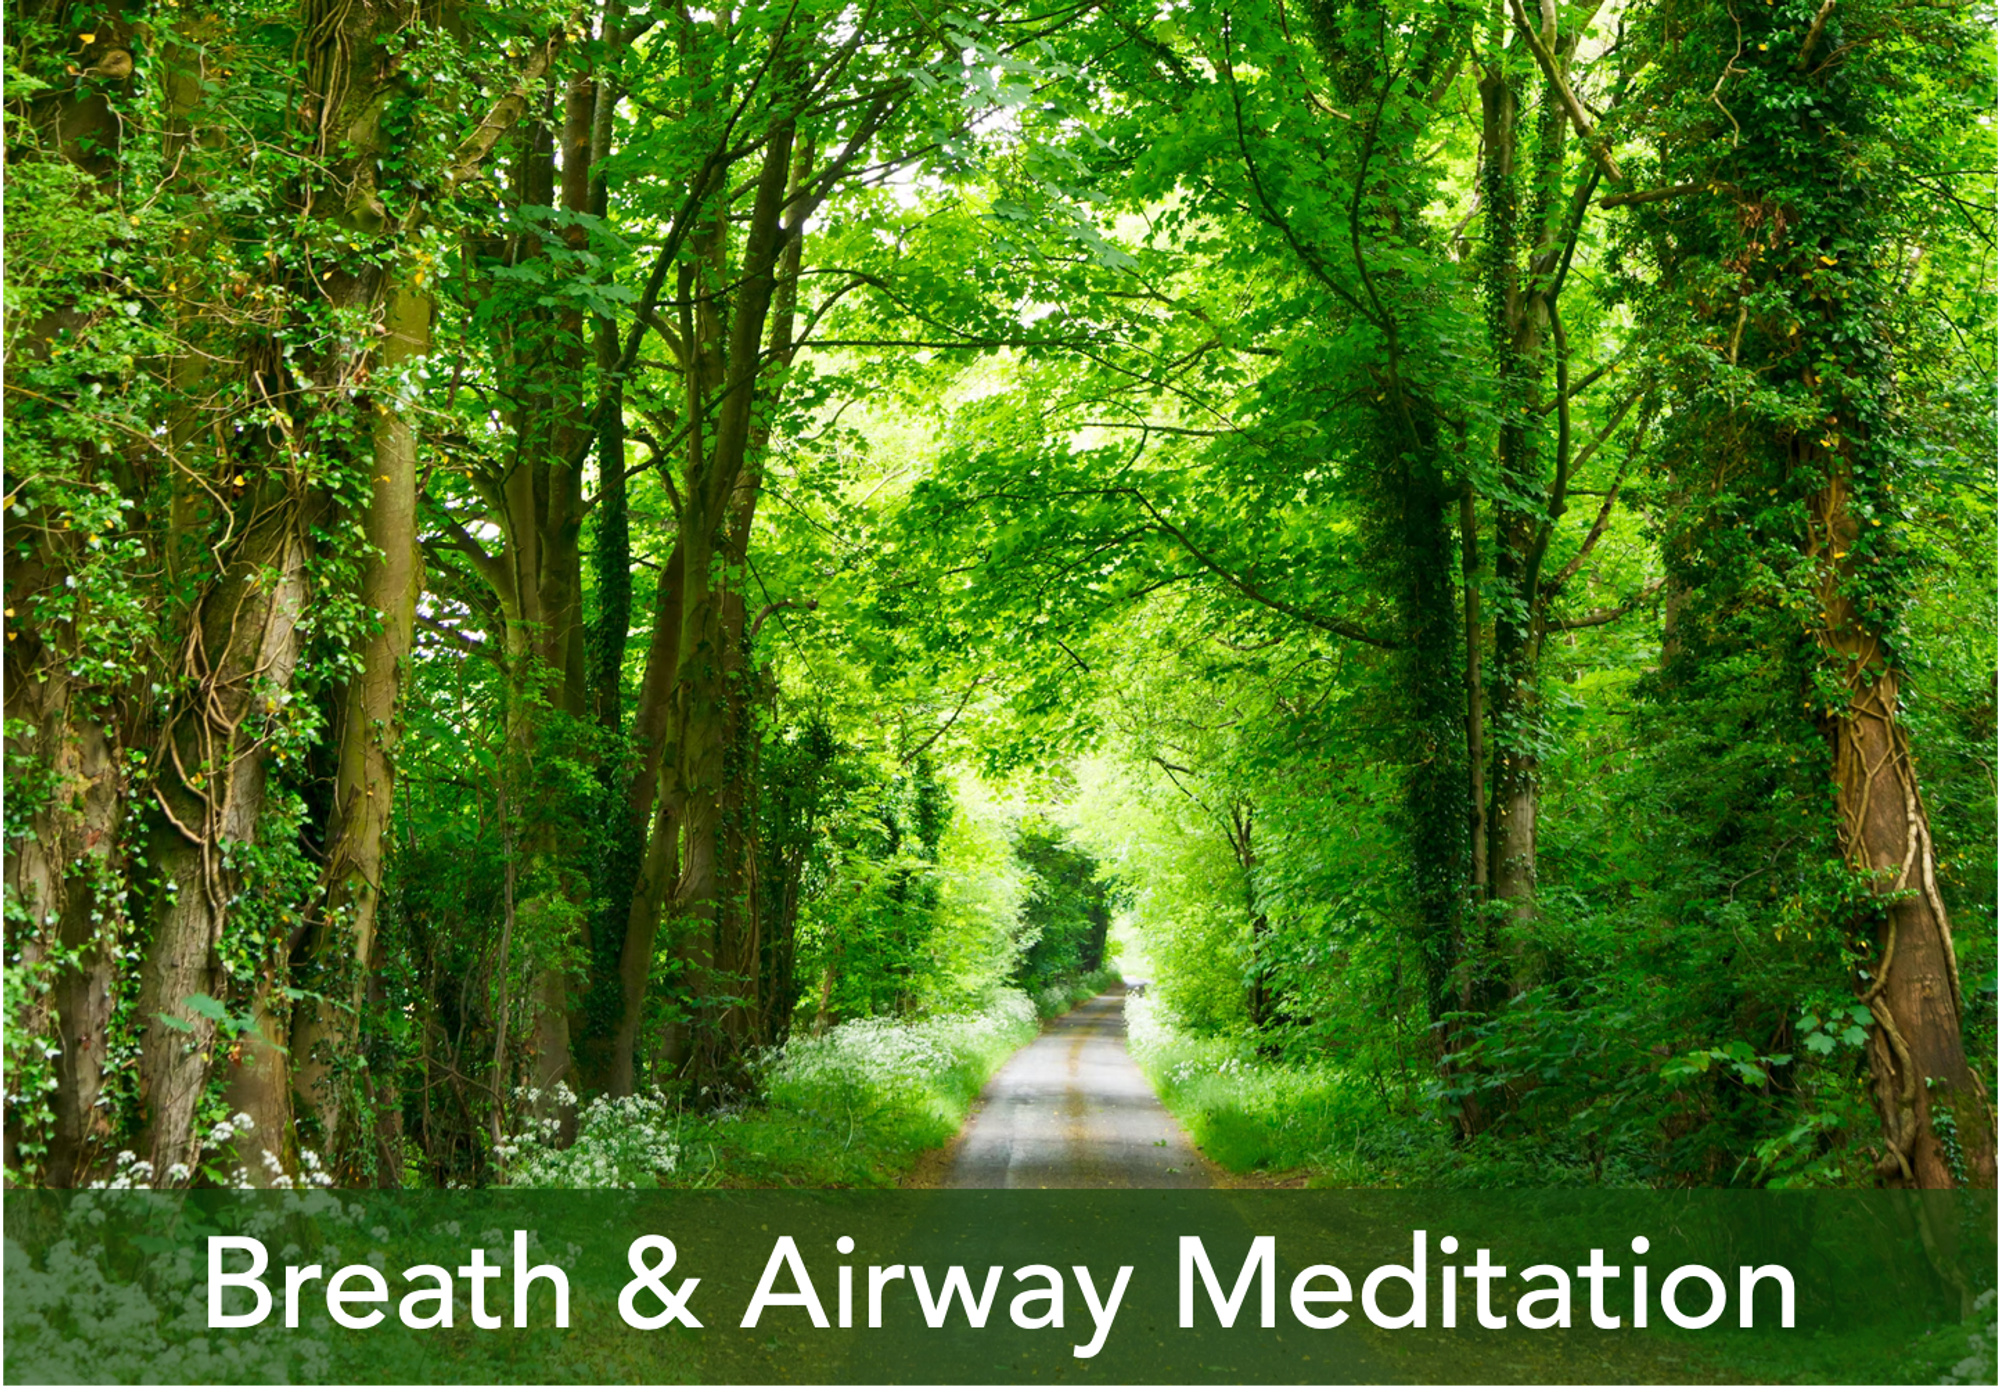 https://insighttimer.com/willmeecham/guided-meditations/beloved-biology-the-corridors-of-breath